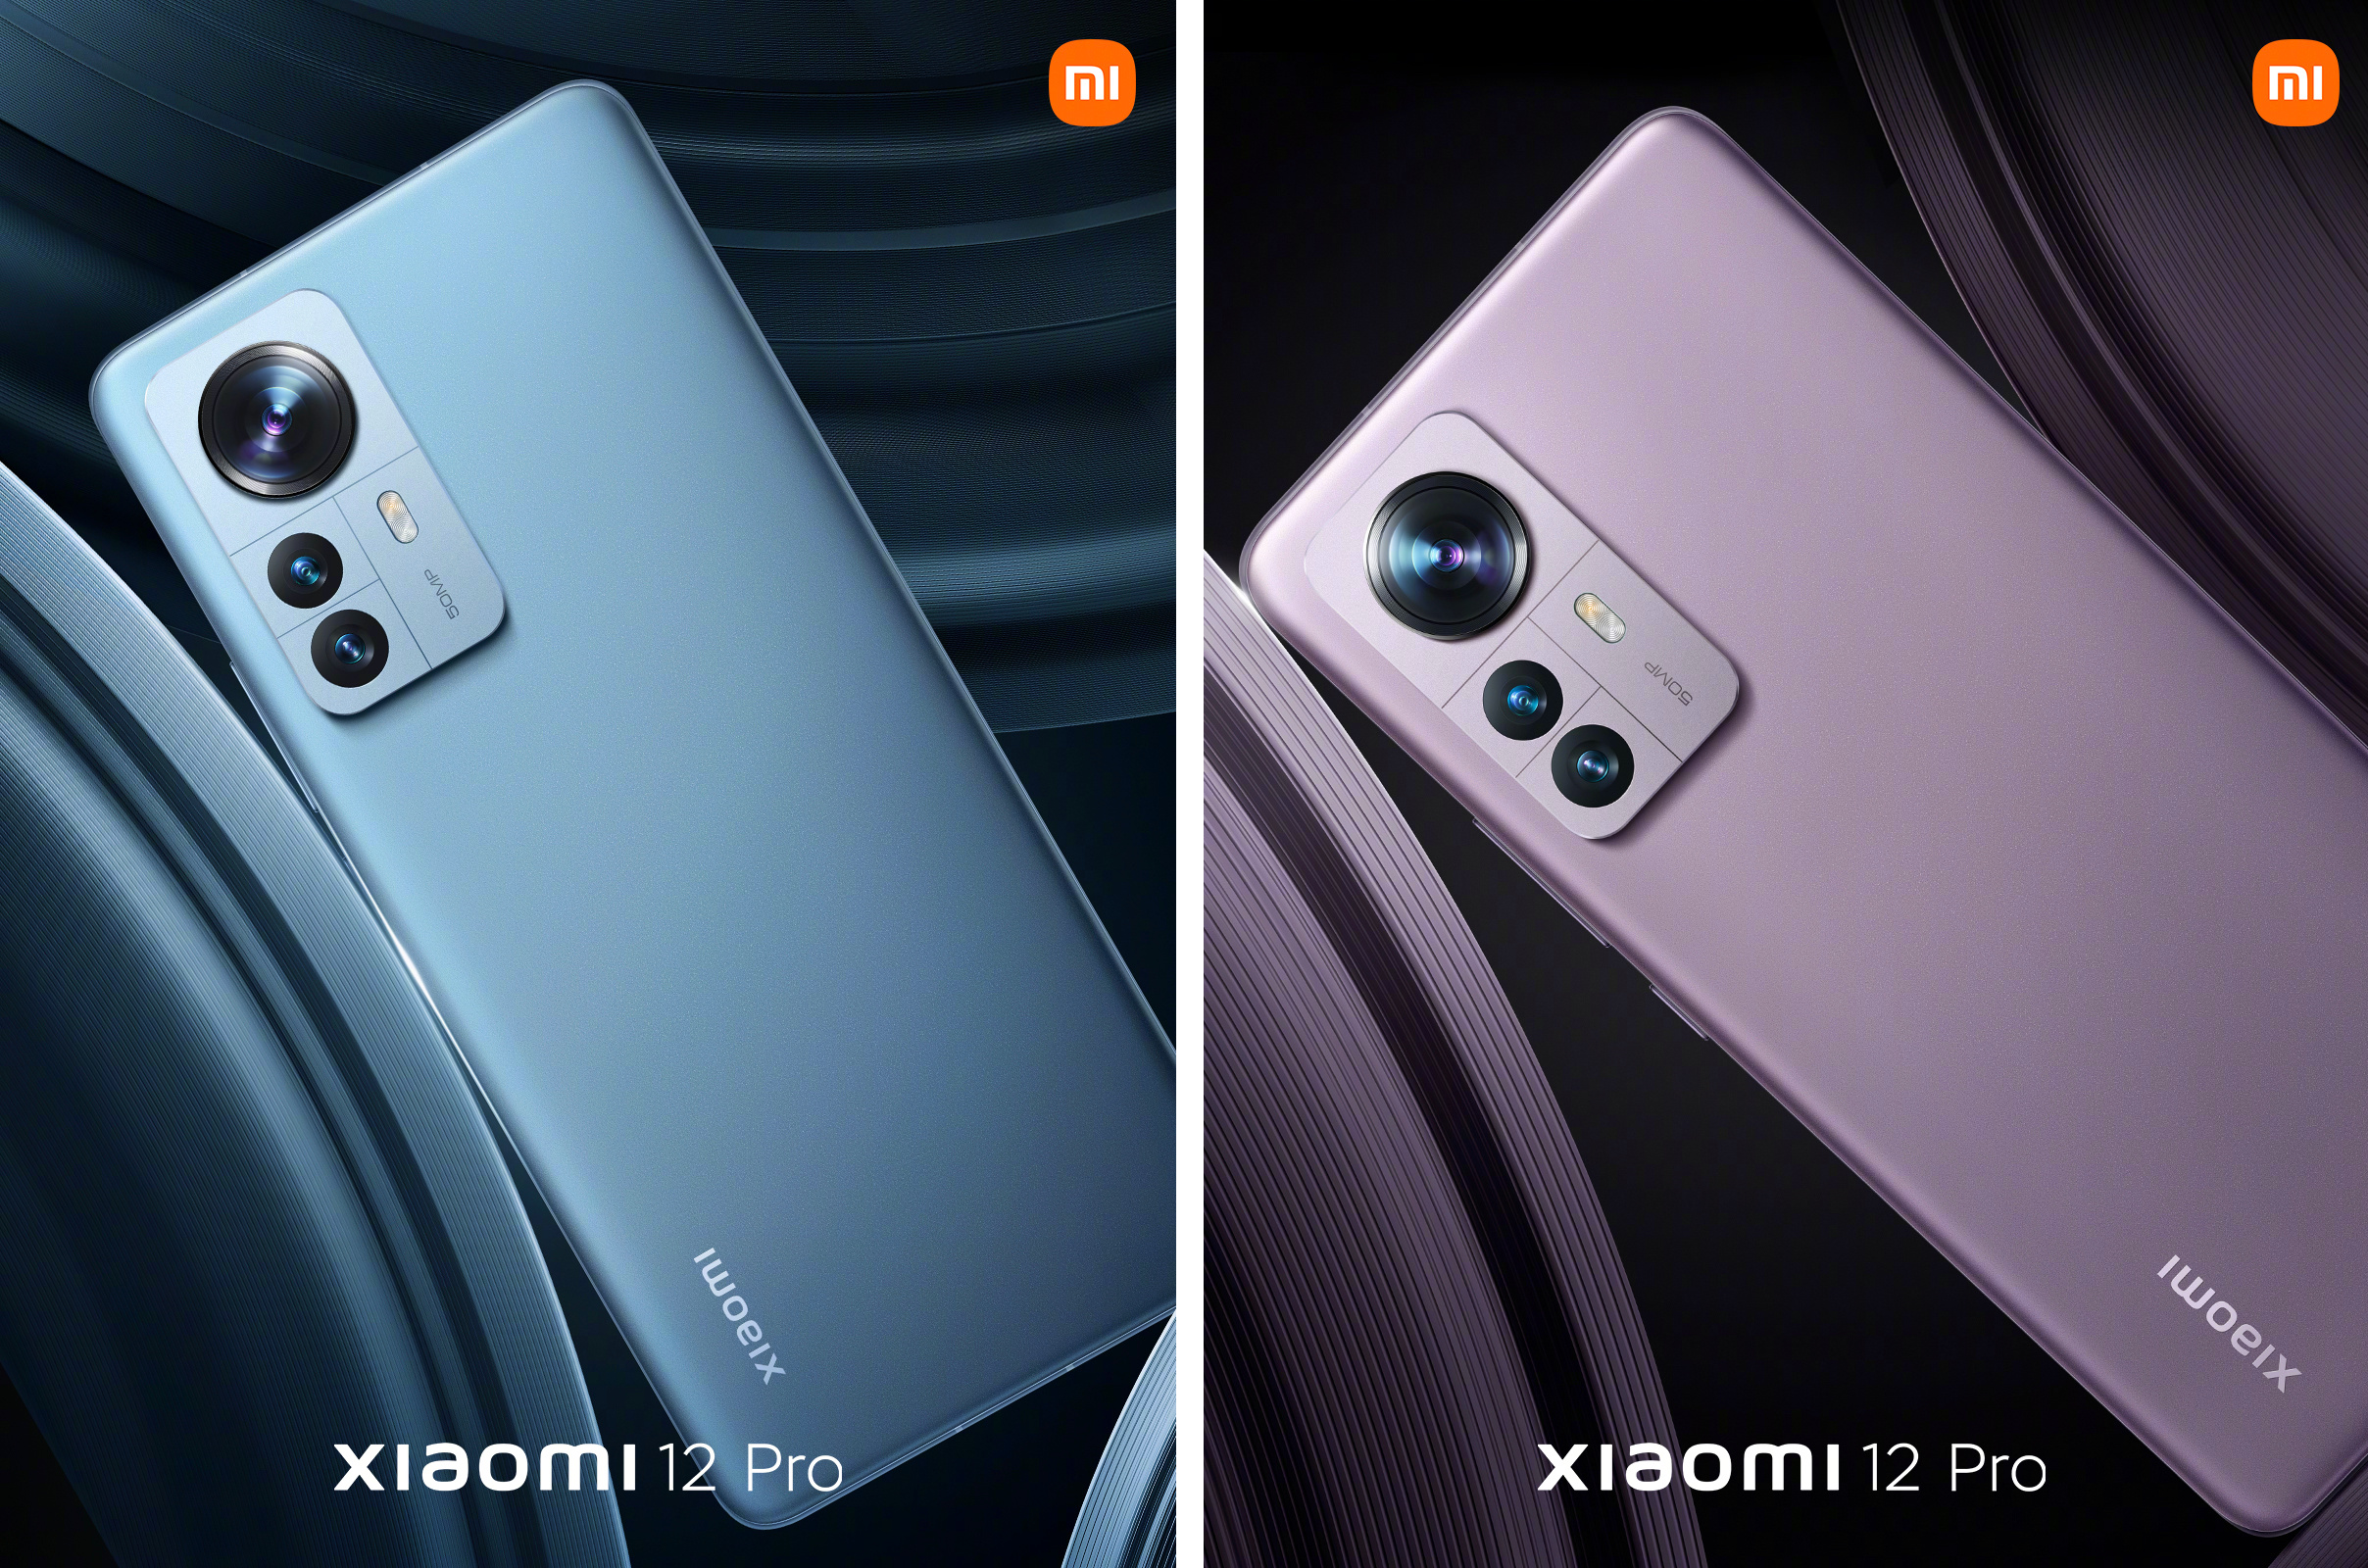  Xiaomi 12 Pro, 5G (12GB+256GB), Snapdragon 8 Gen 1, 50+50+50MP Flagship Cameras (OIS), 10bit 2K+ Curved AMOLED Display